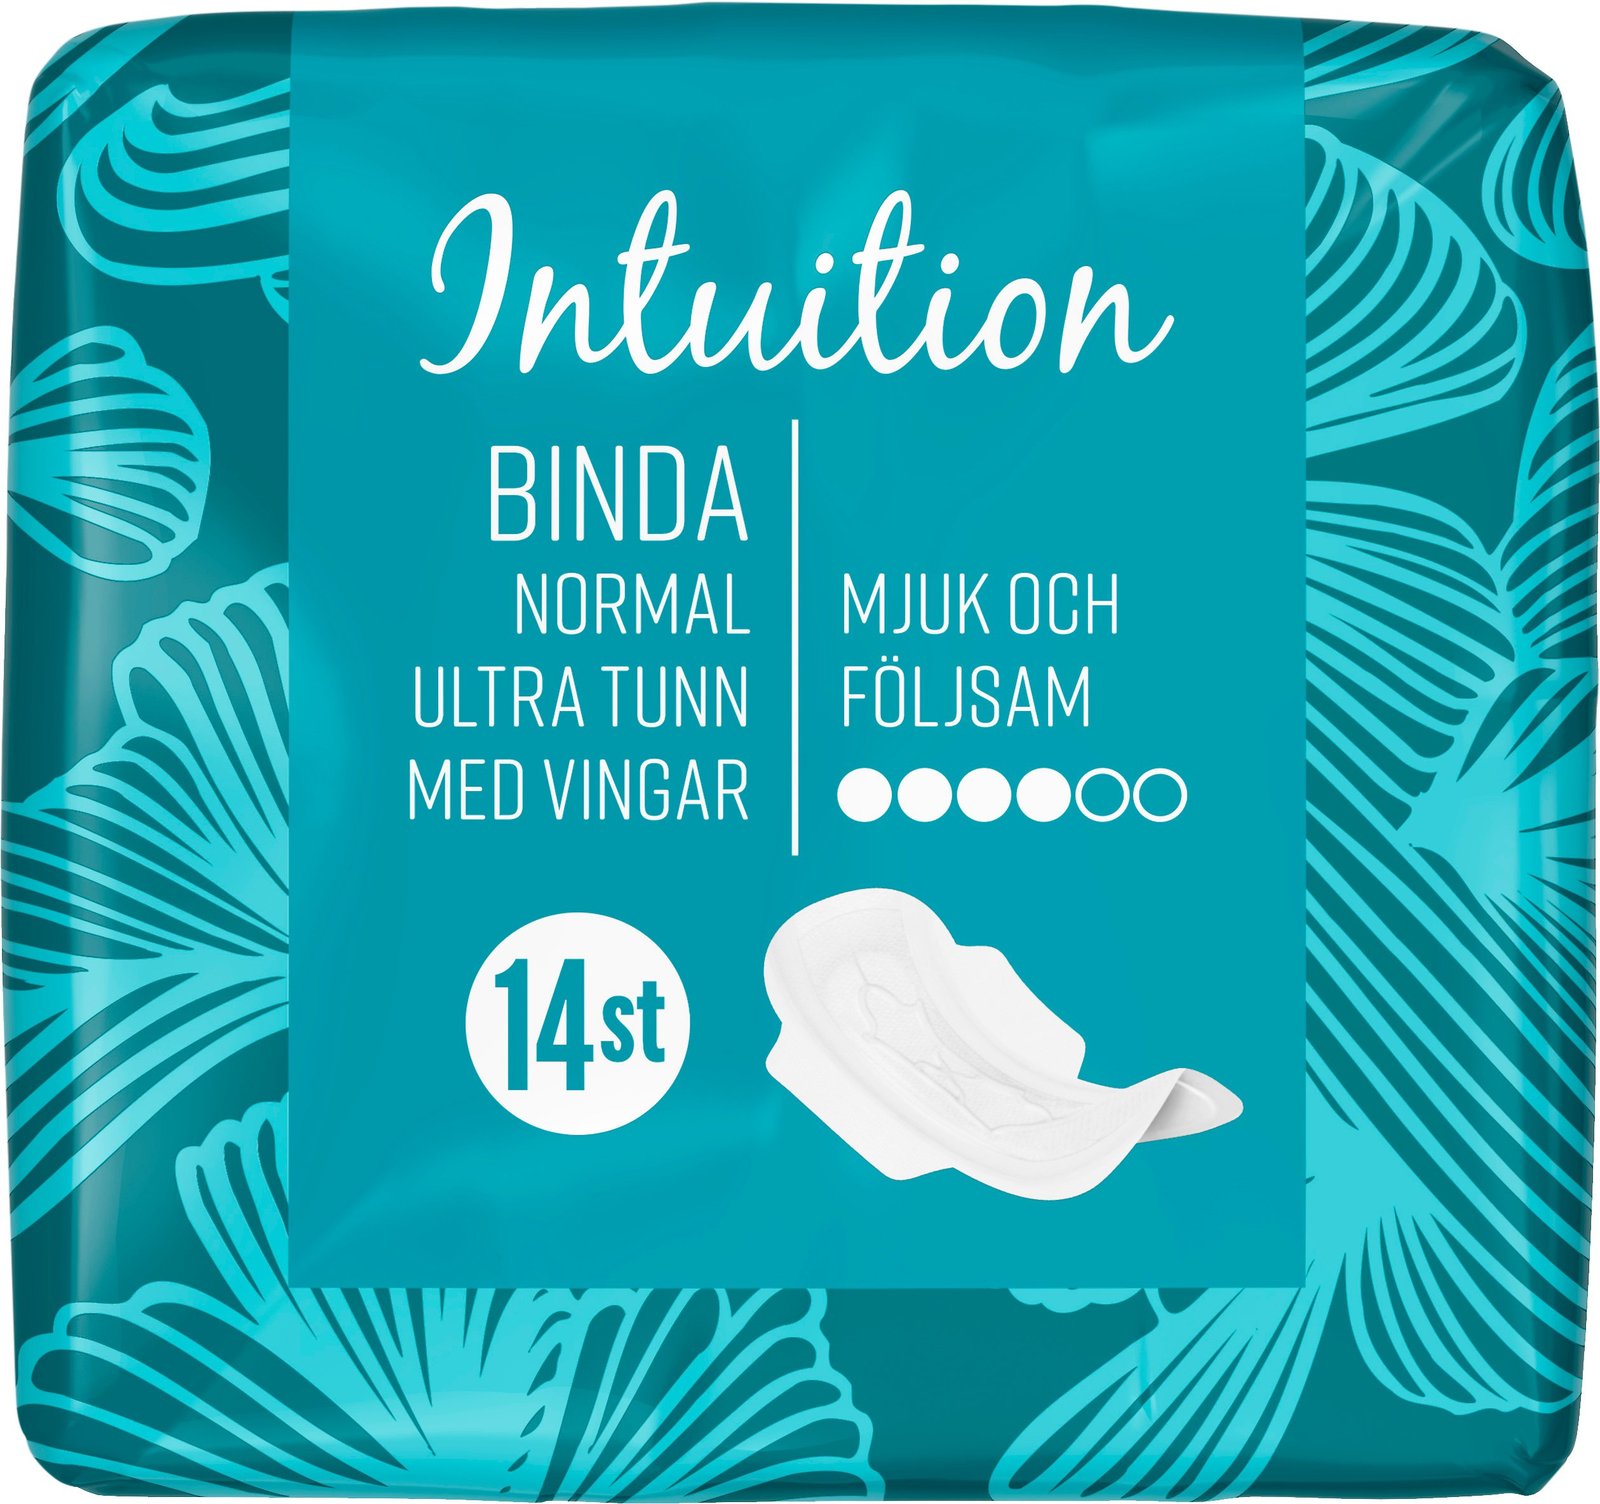 Intuition Binda Normal 14 st